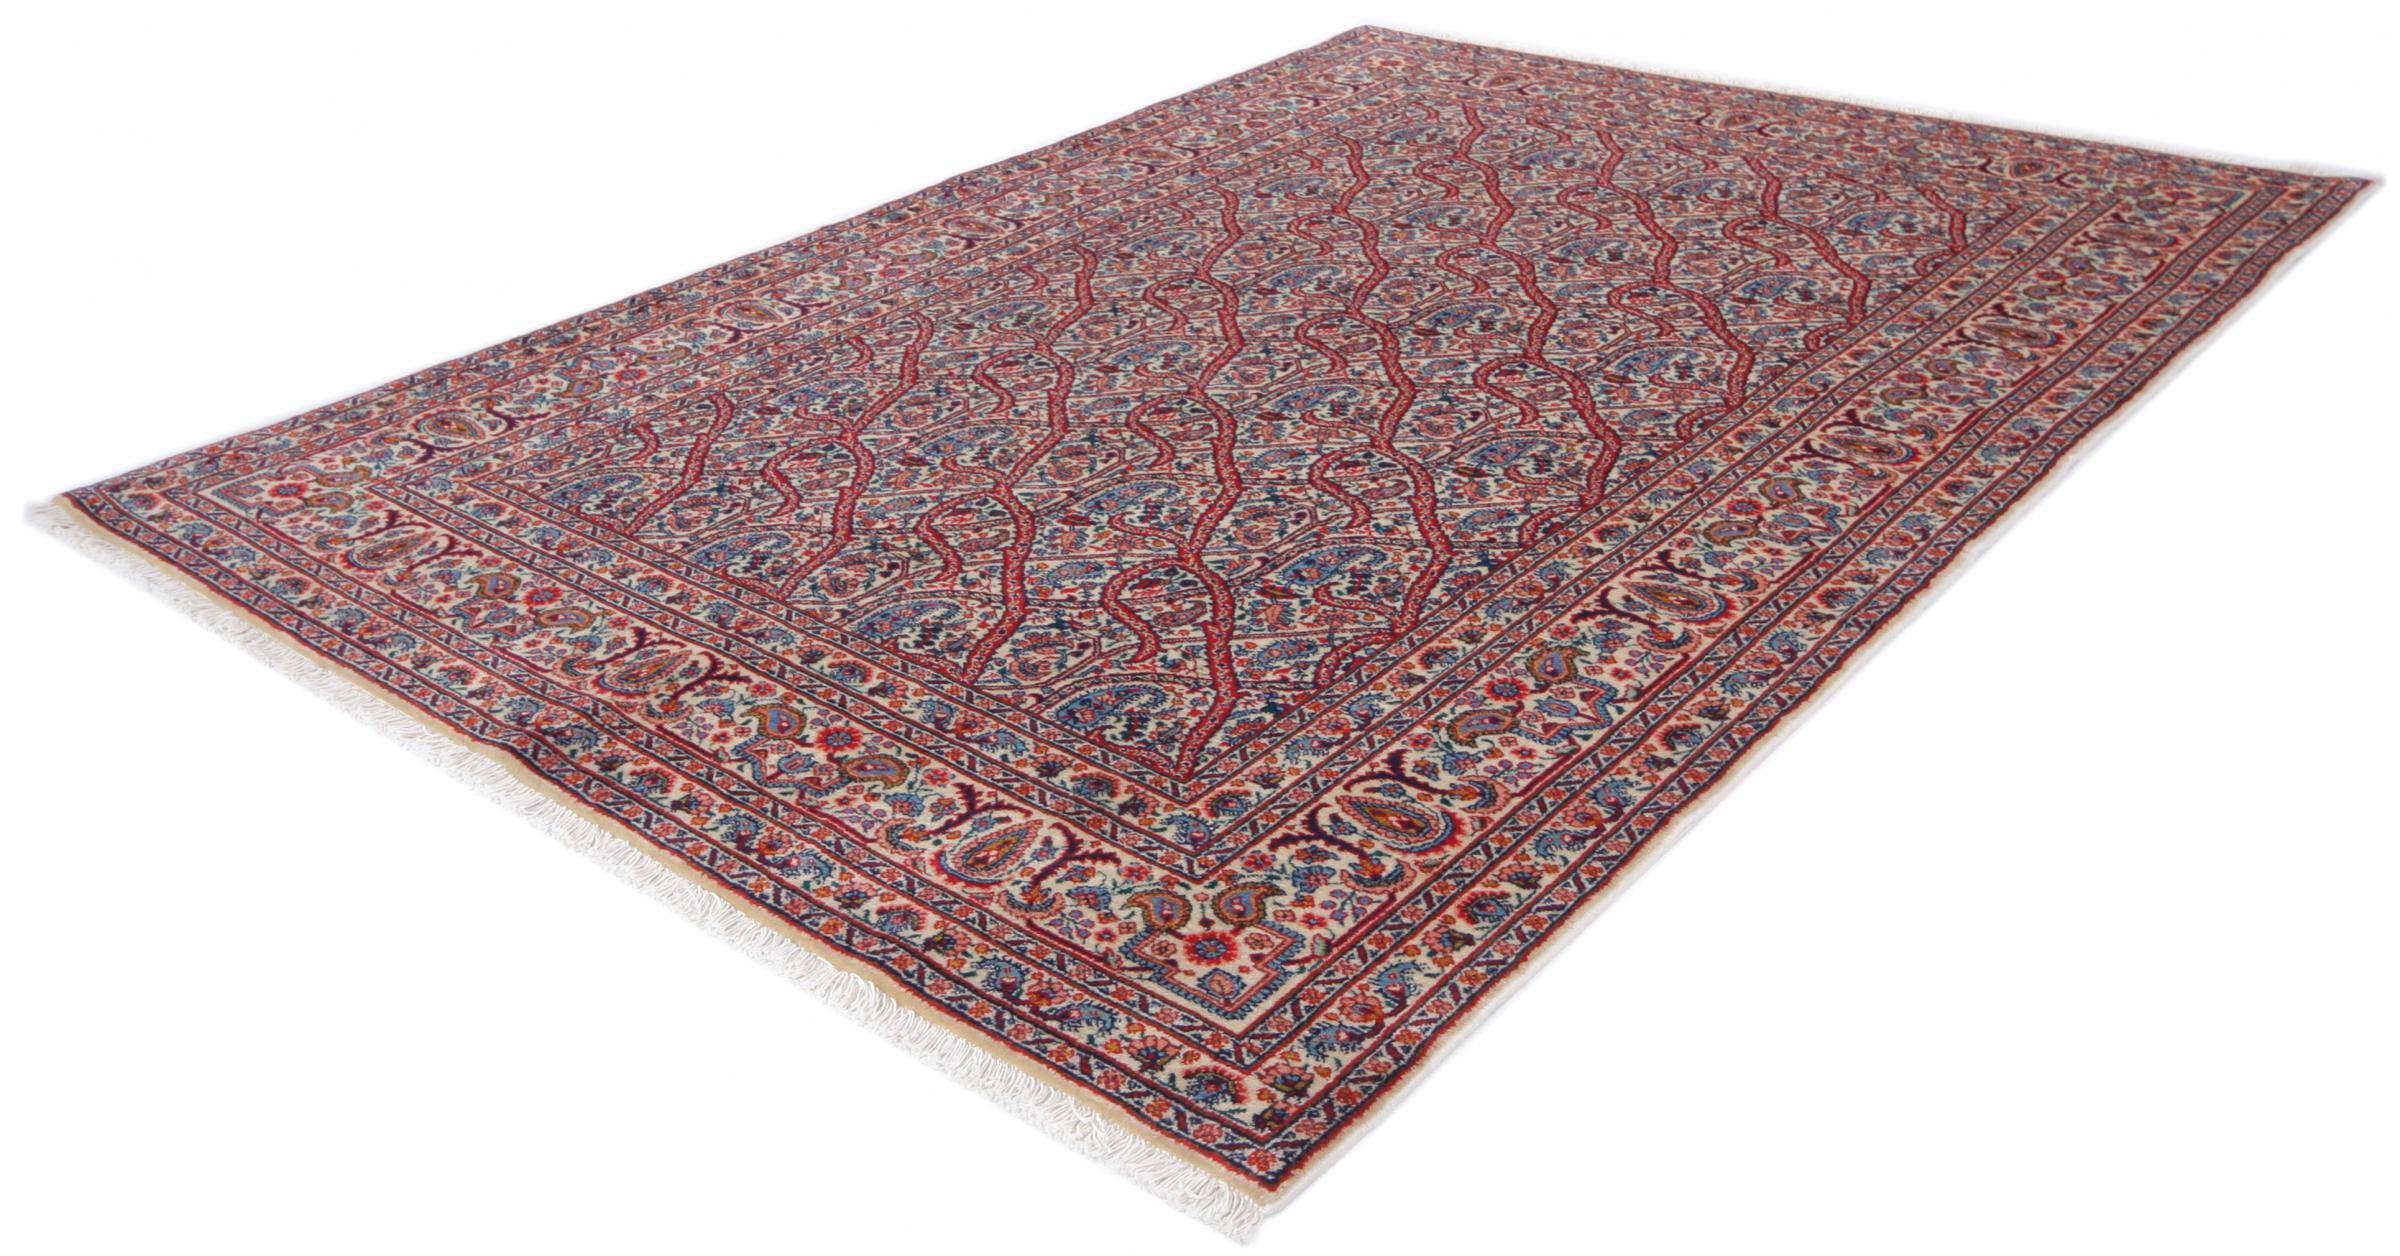 A beautiful Persian rug, Tabriz, 20th century

Size: 207 x 142cm
Thickness: ap. 10 mm
Knot density: 320 000 - 360 000 / m² 
Pile: Handspun wool
Warp: Cotton
Condition/Maintenance: Perfect 
Weight: ap. 10.00 kg.